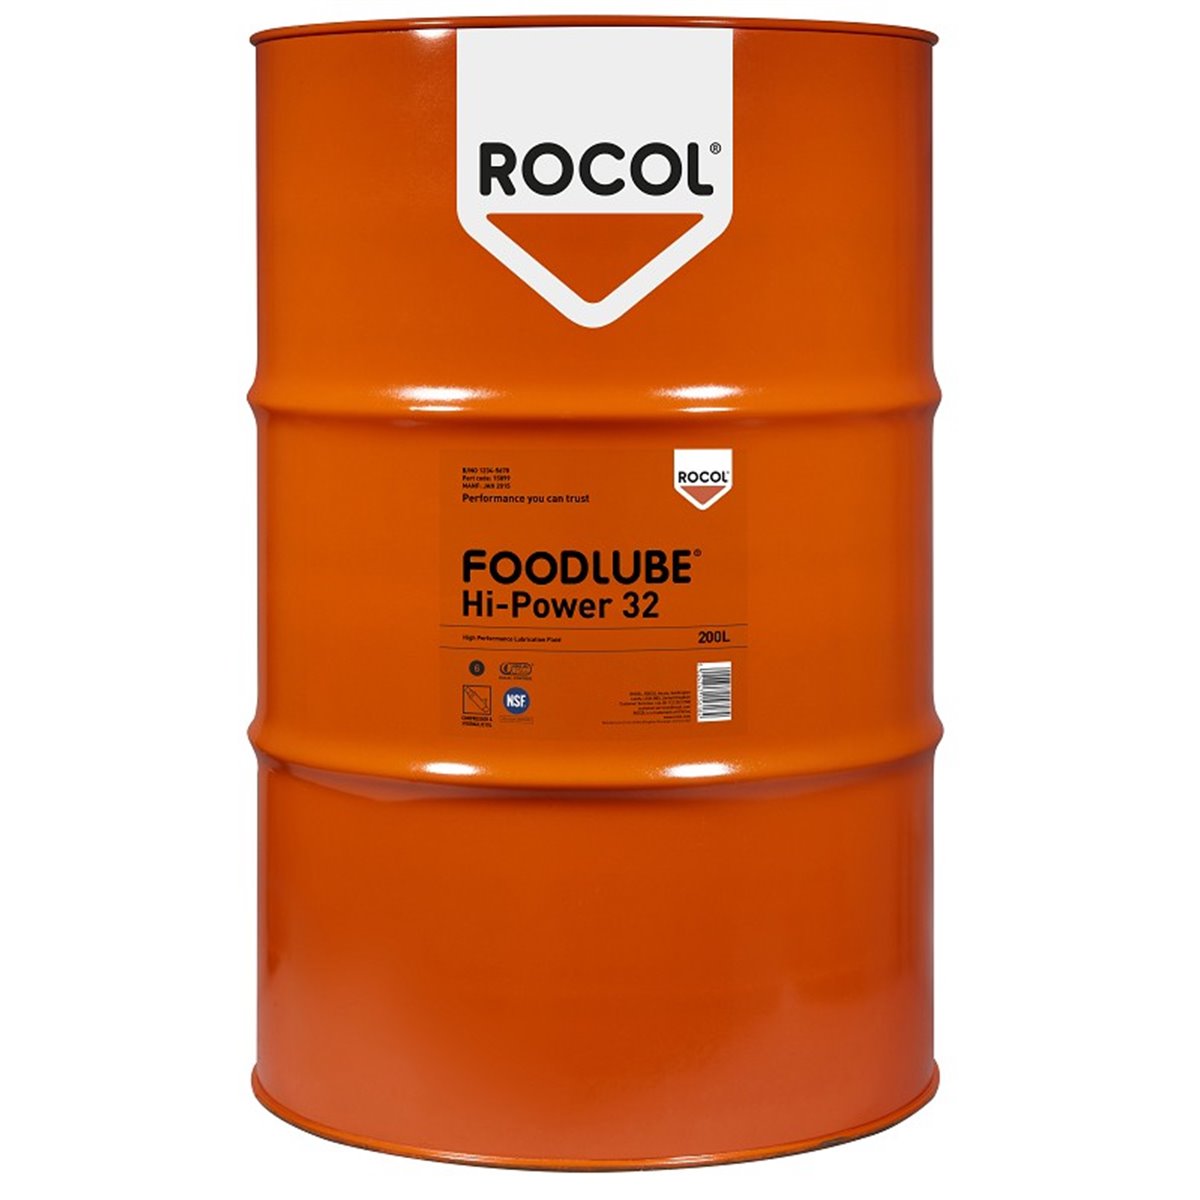 FOODLUBE Hi-Power 32 Rocol 200l RS15899